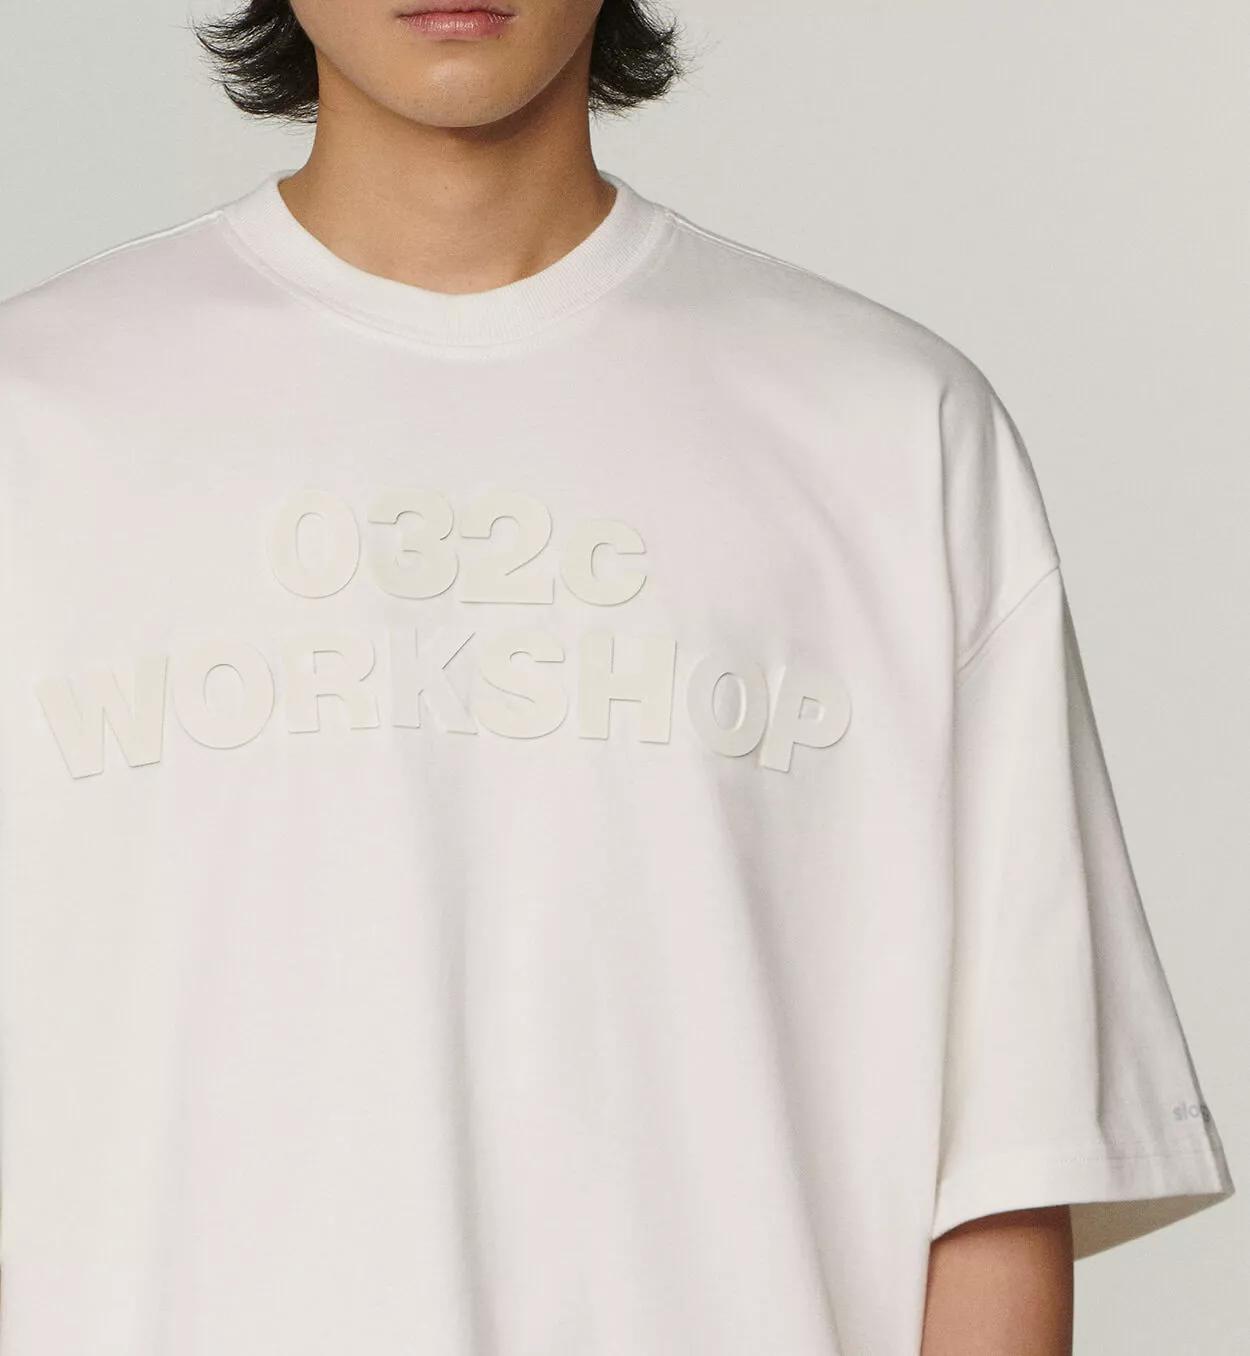 SALE】【WEB限定】032c WORKSHOP スロギーコラボ Tシャツ